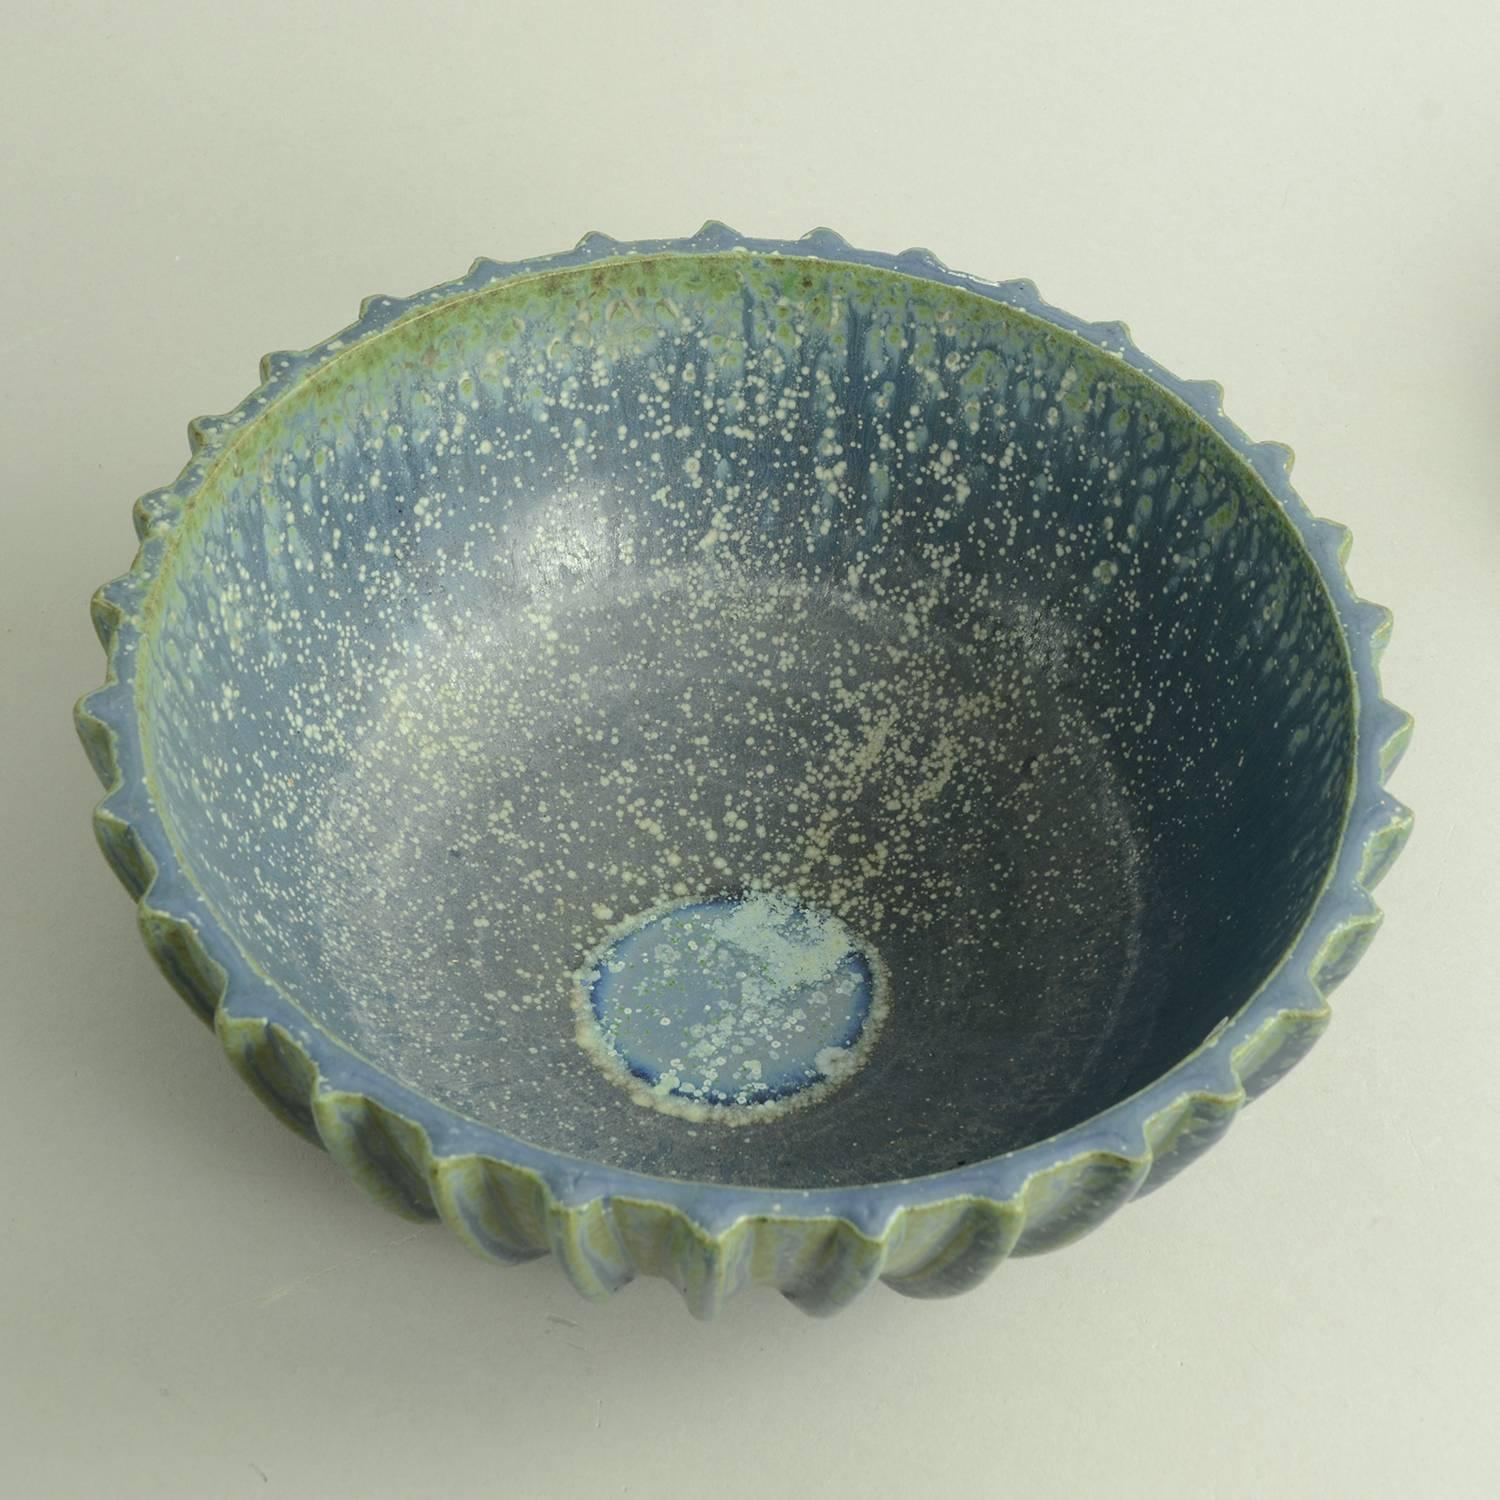 Arne Bang, own studio, Denmark
Ribbed stoneware bowl with matte blue crystalline glaze, 1930s.
Measures: Height 4 1/4